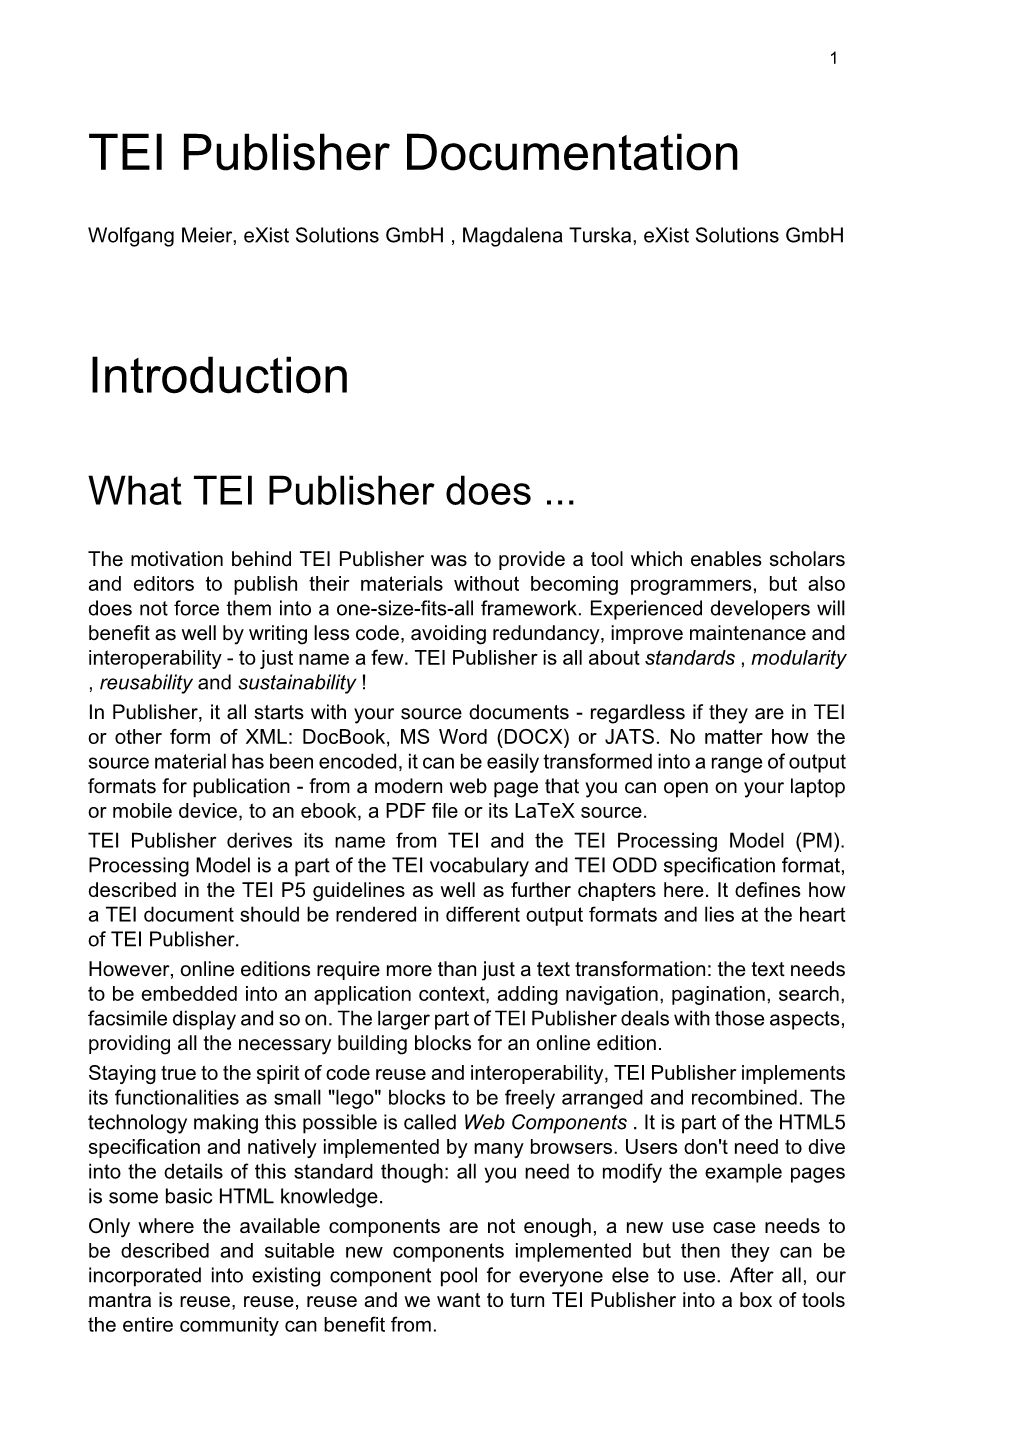 TEI Publisher Documentation Introduction